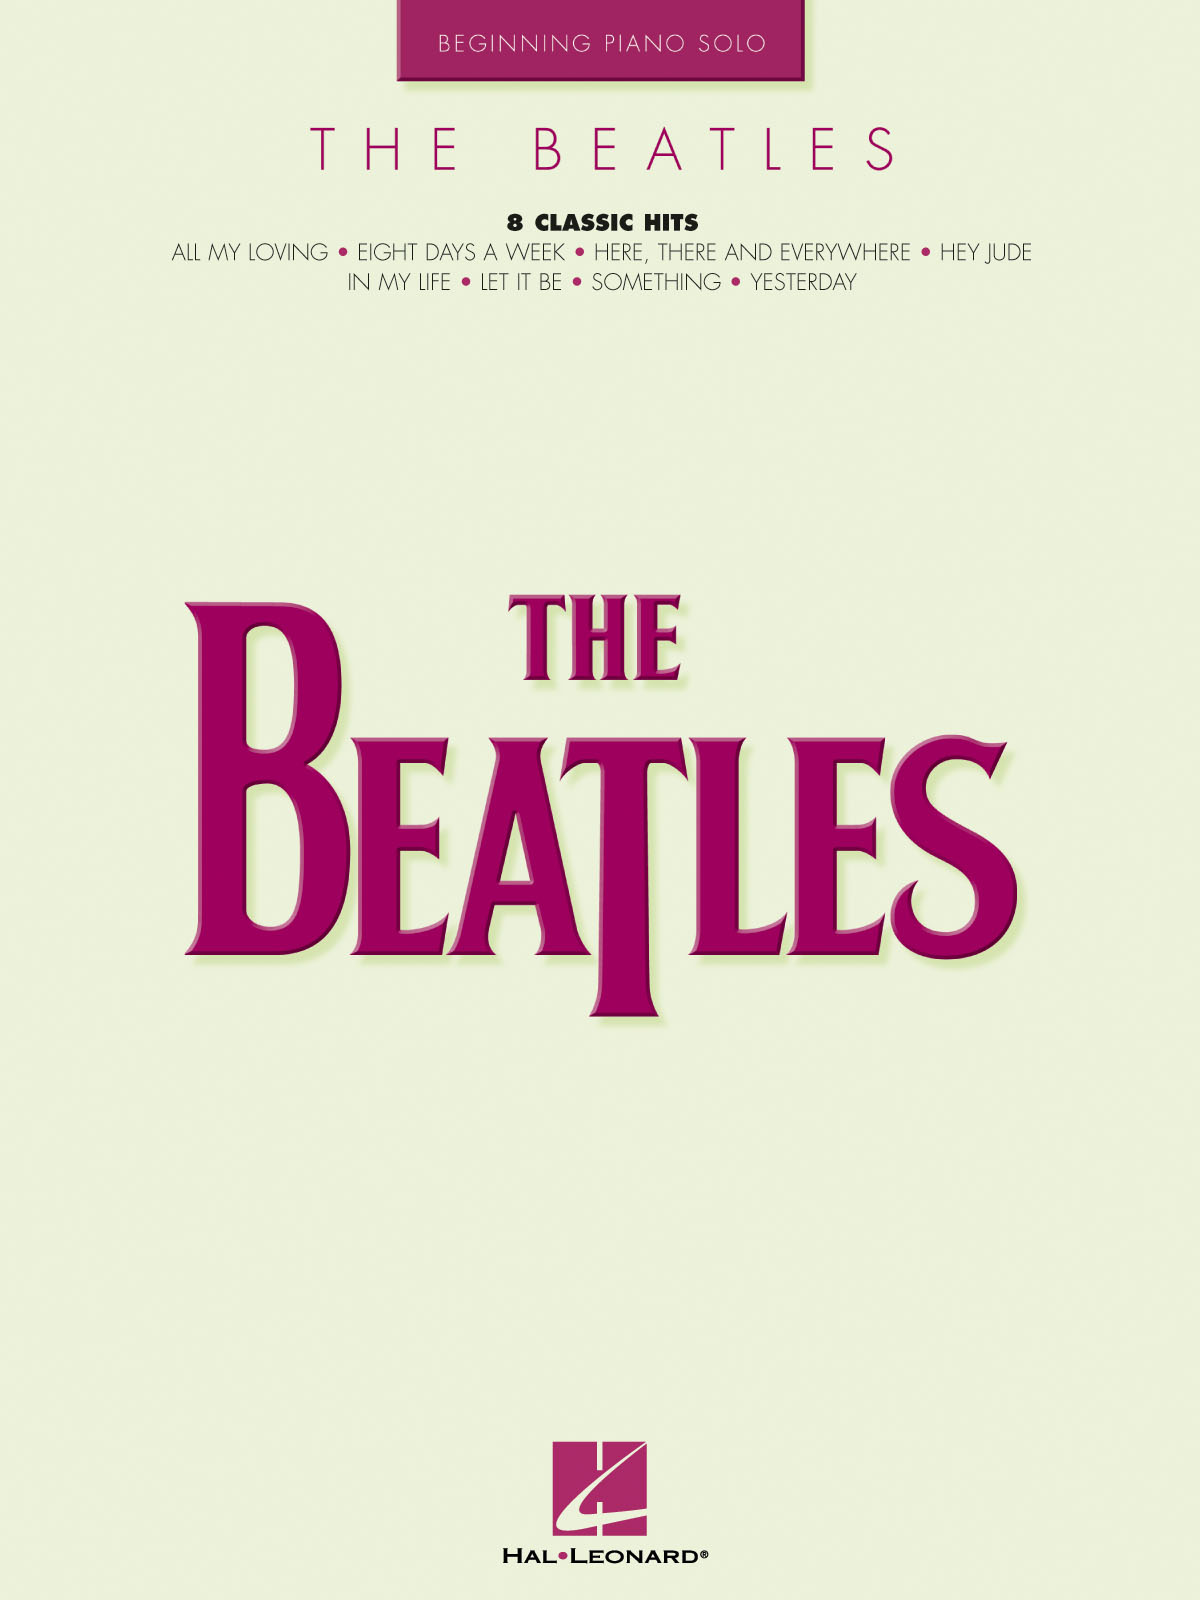 Beatles Beginning Piano Solo Sheet Music Songbook